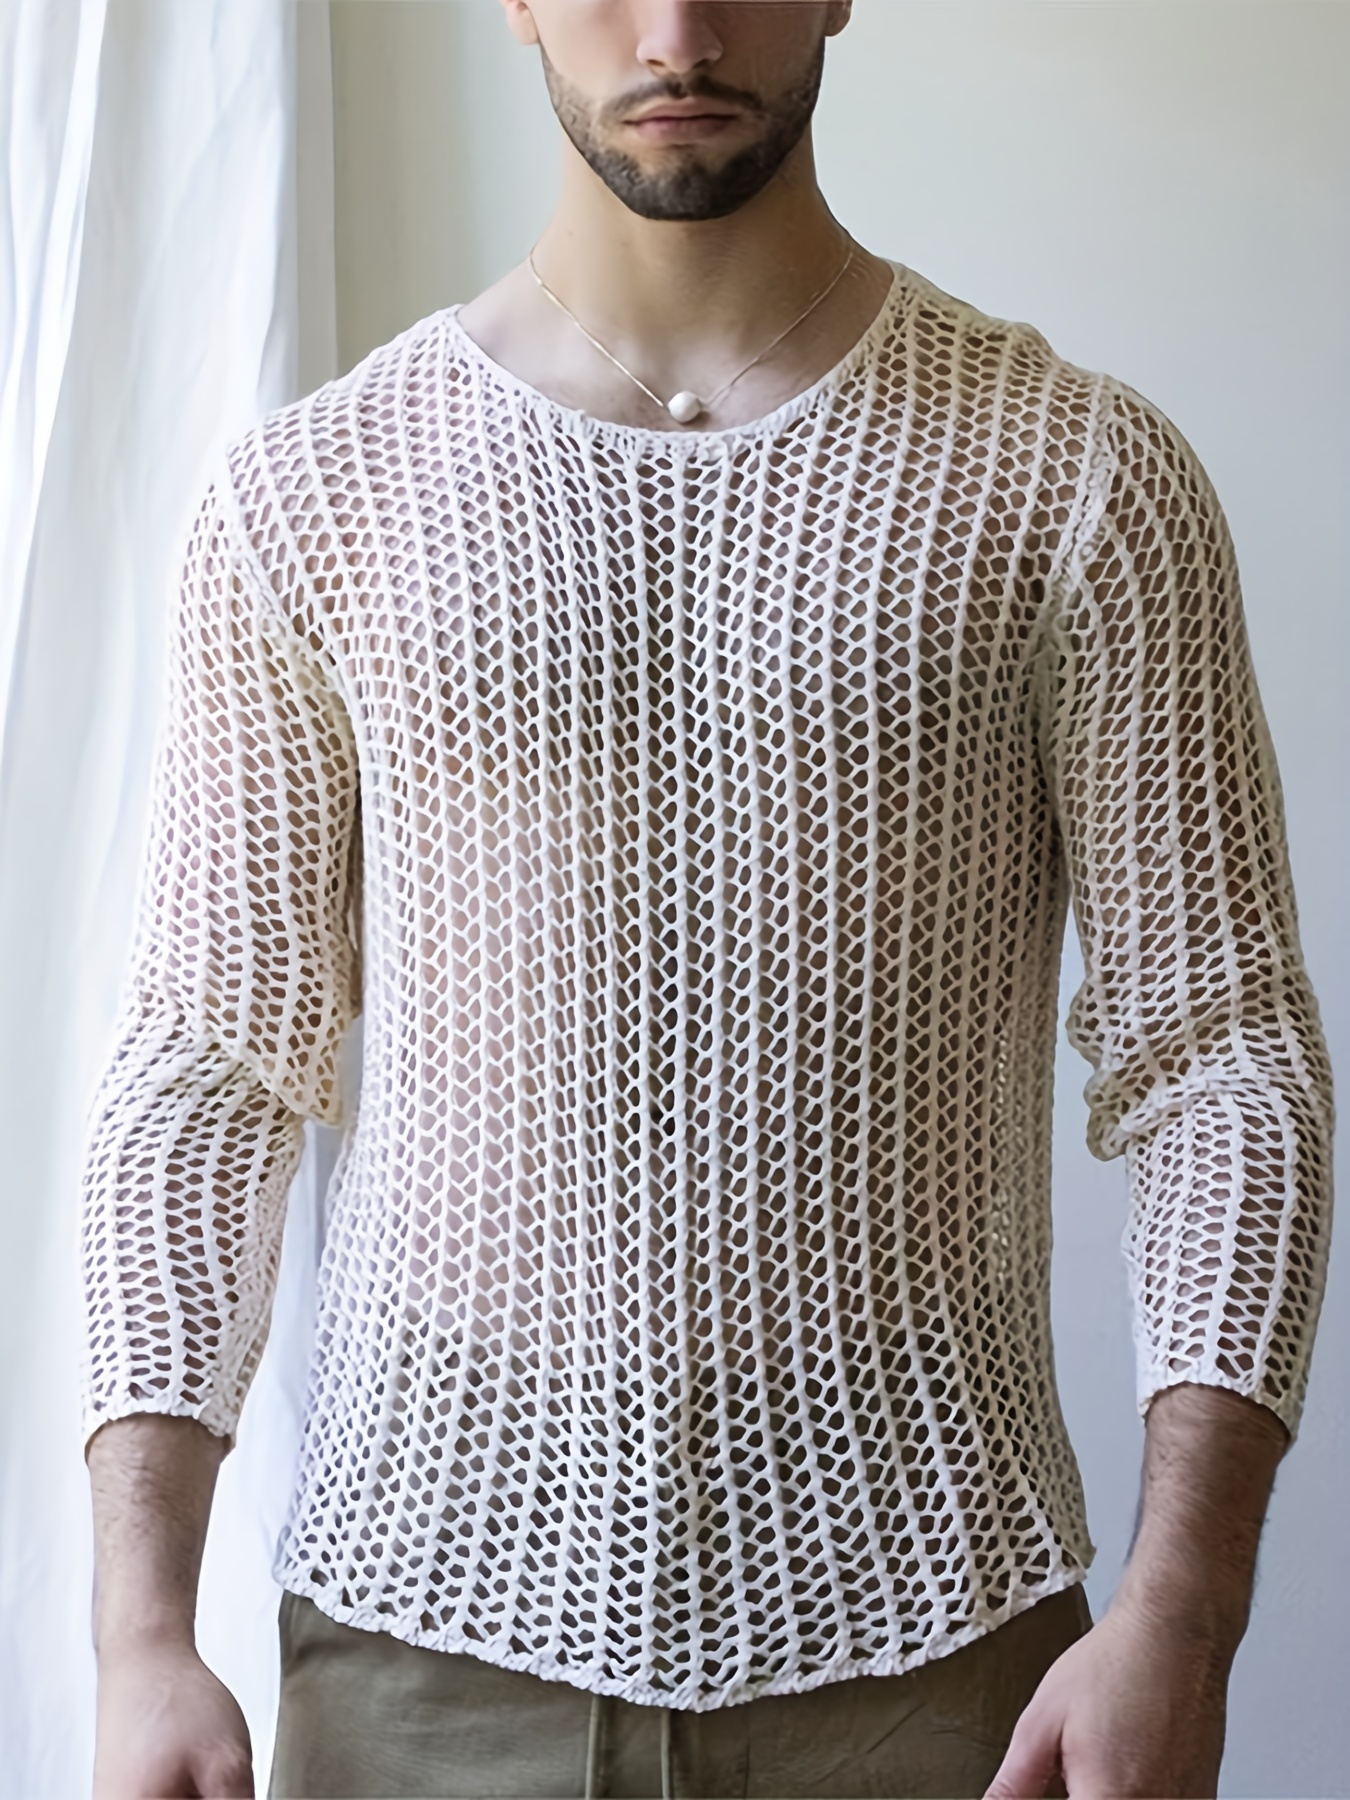 Men's Fishnet Sheer Shirt Tops Long Sleeve Round Neck Tee Shirt See Through  Pullover Tops